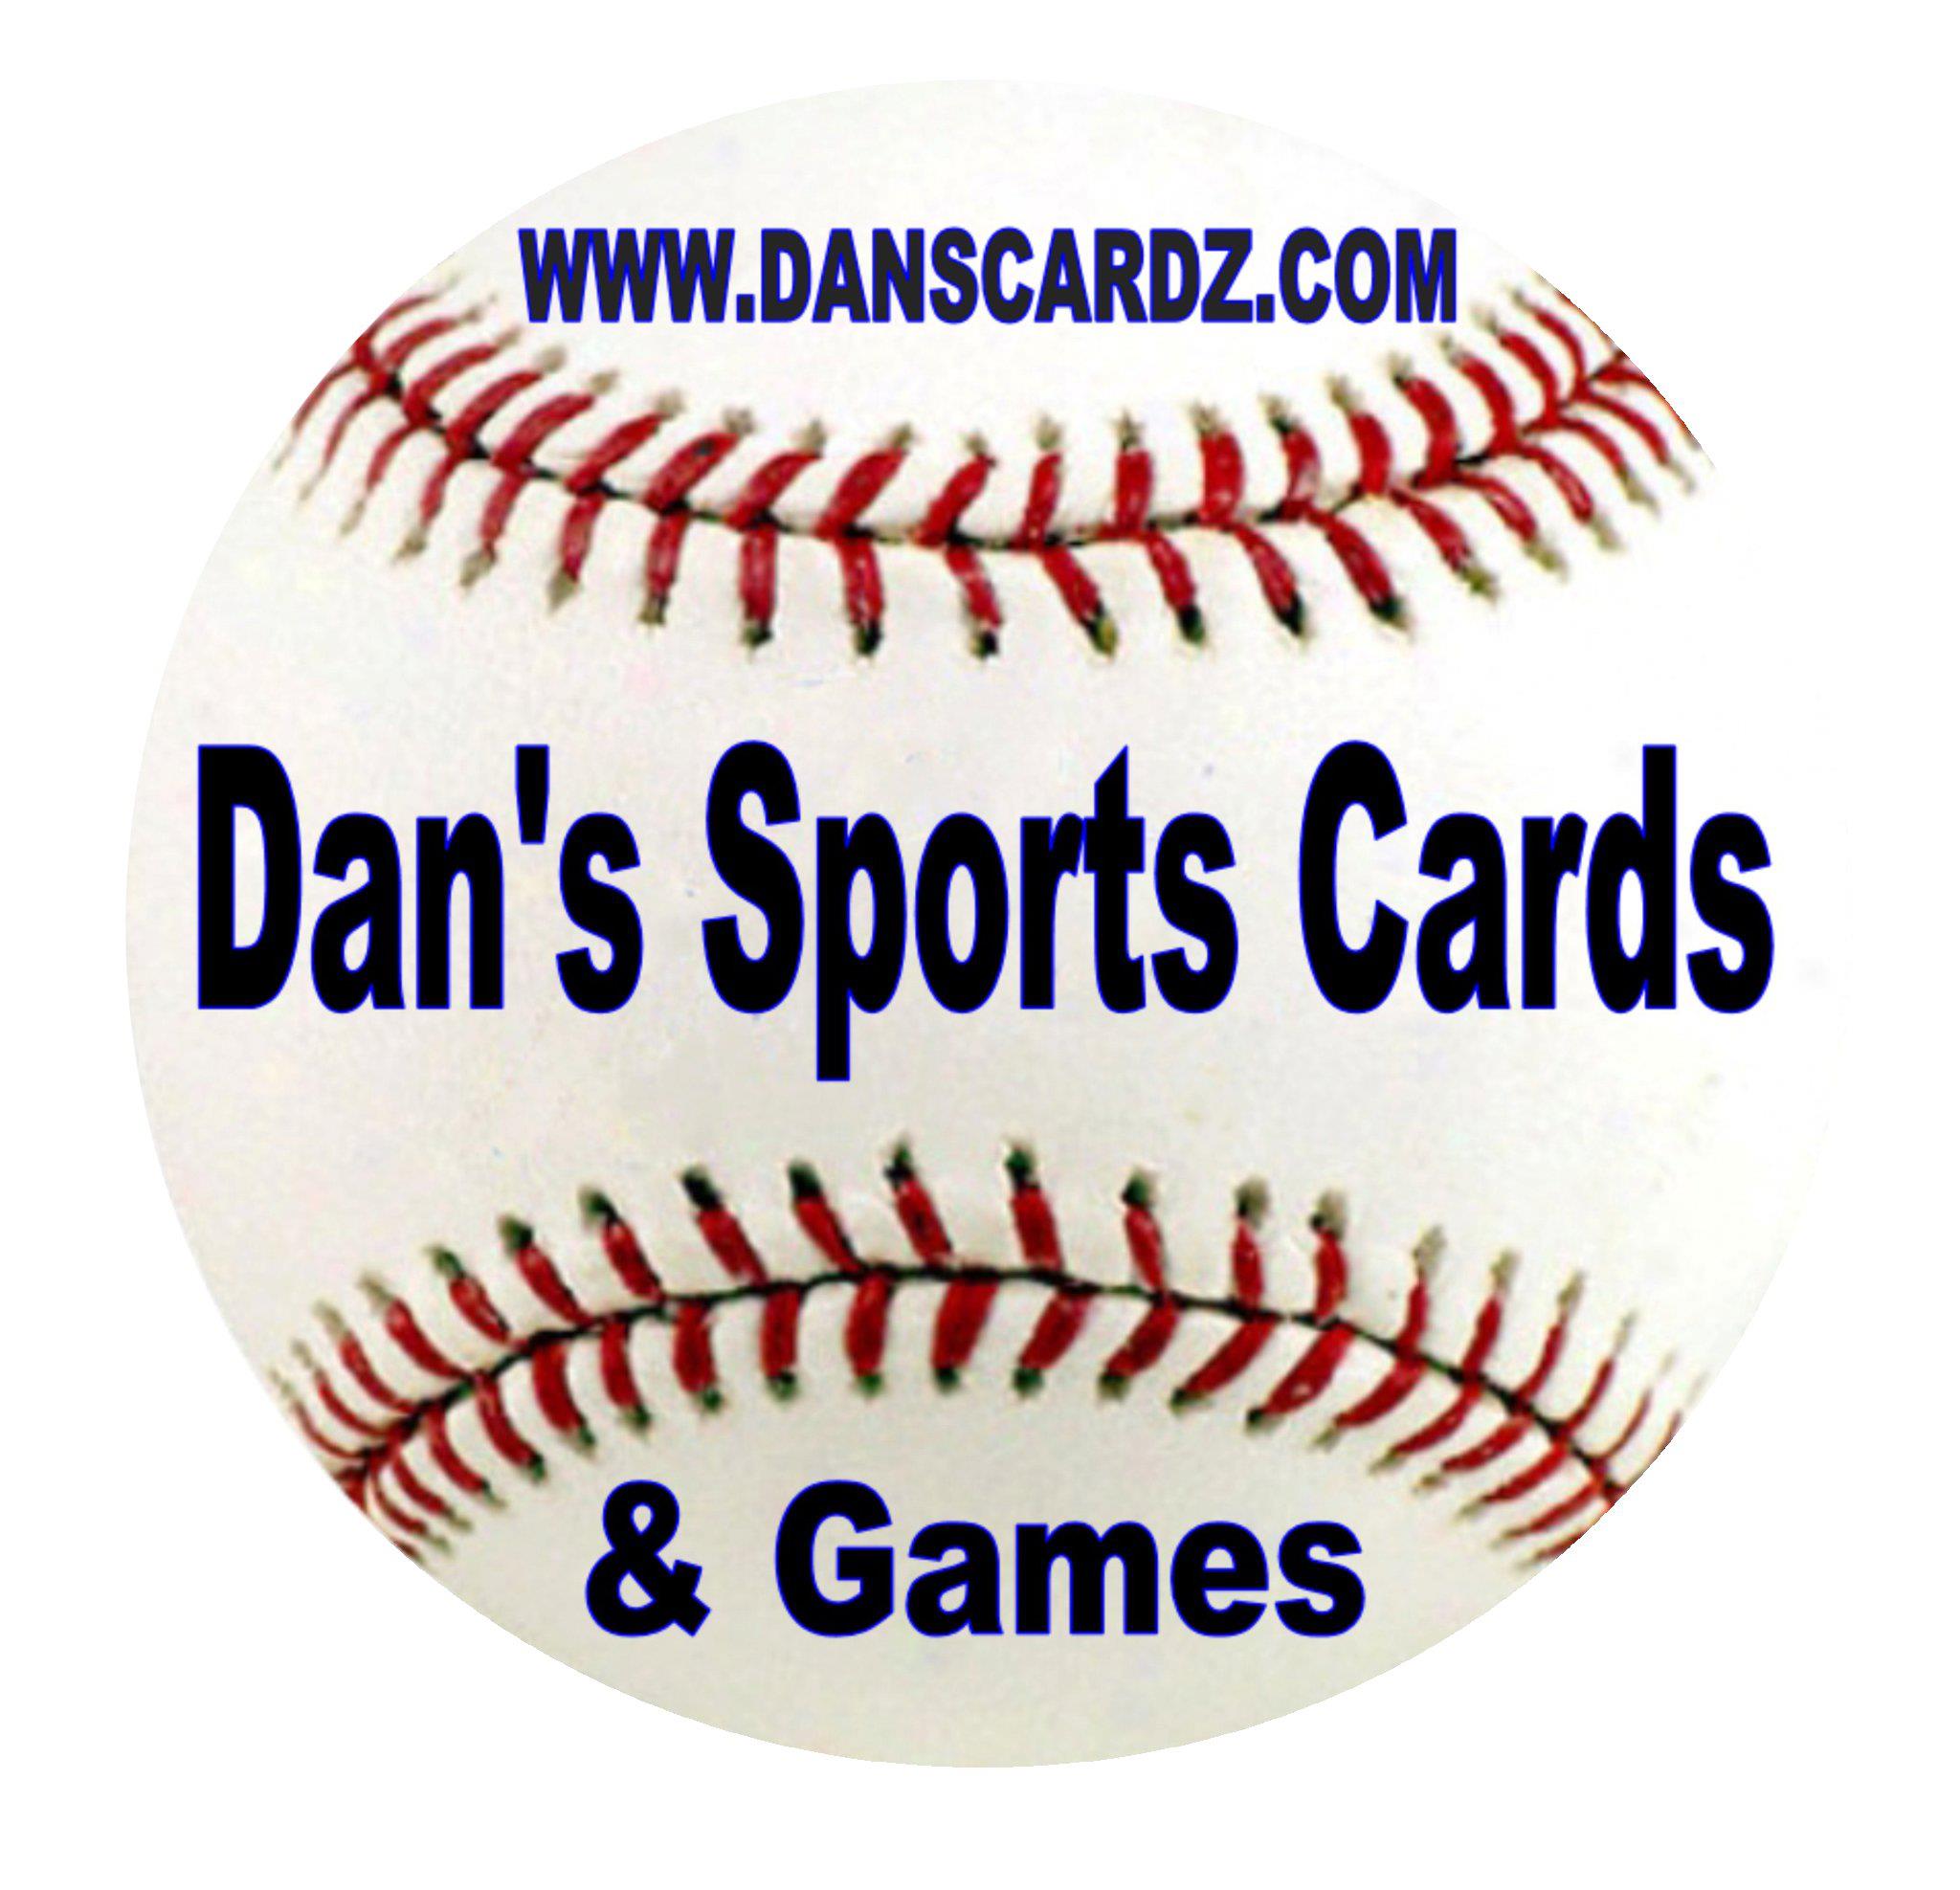 Dan's Sports Cards